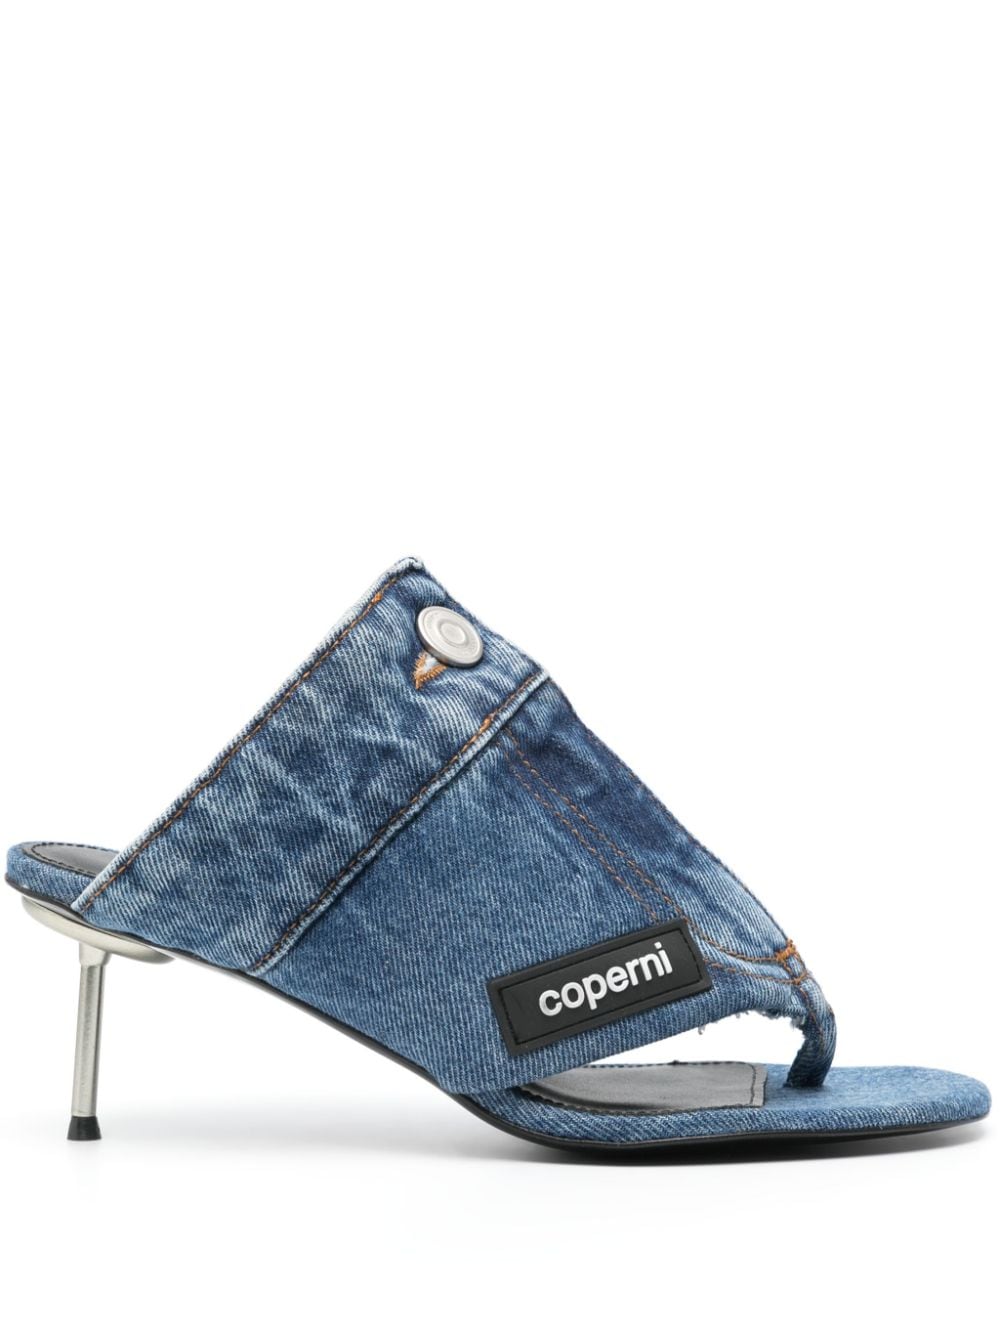 Coperni 70mm denim sandals - Blue von Coperni